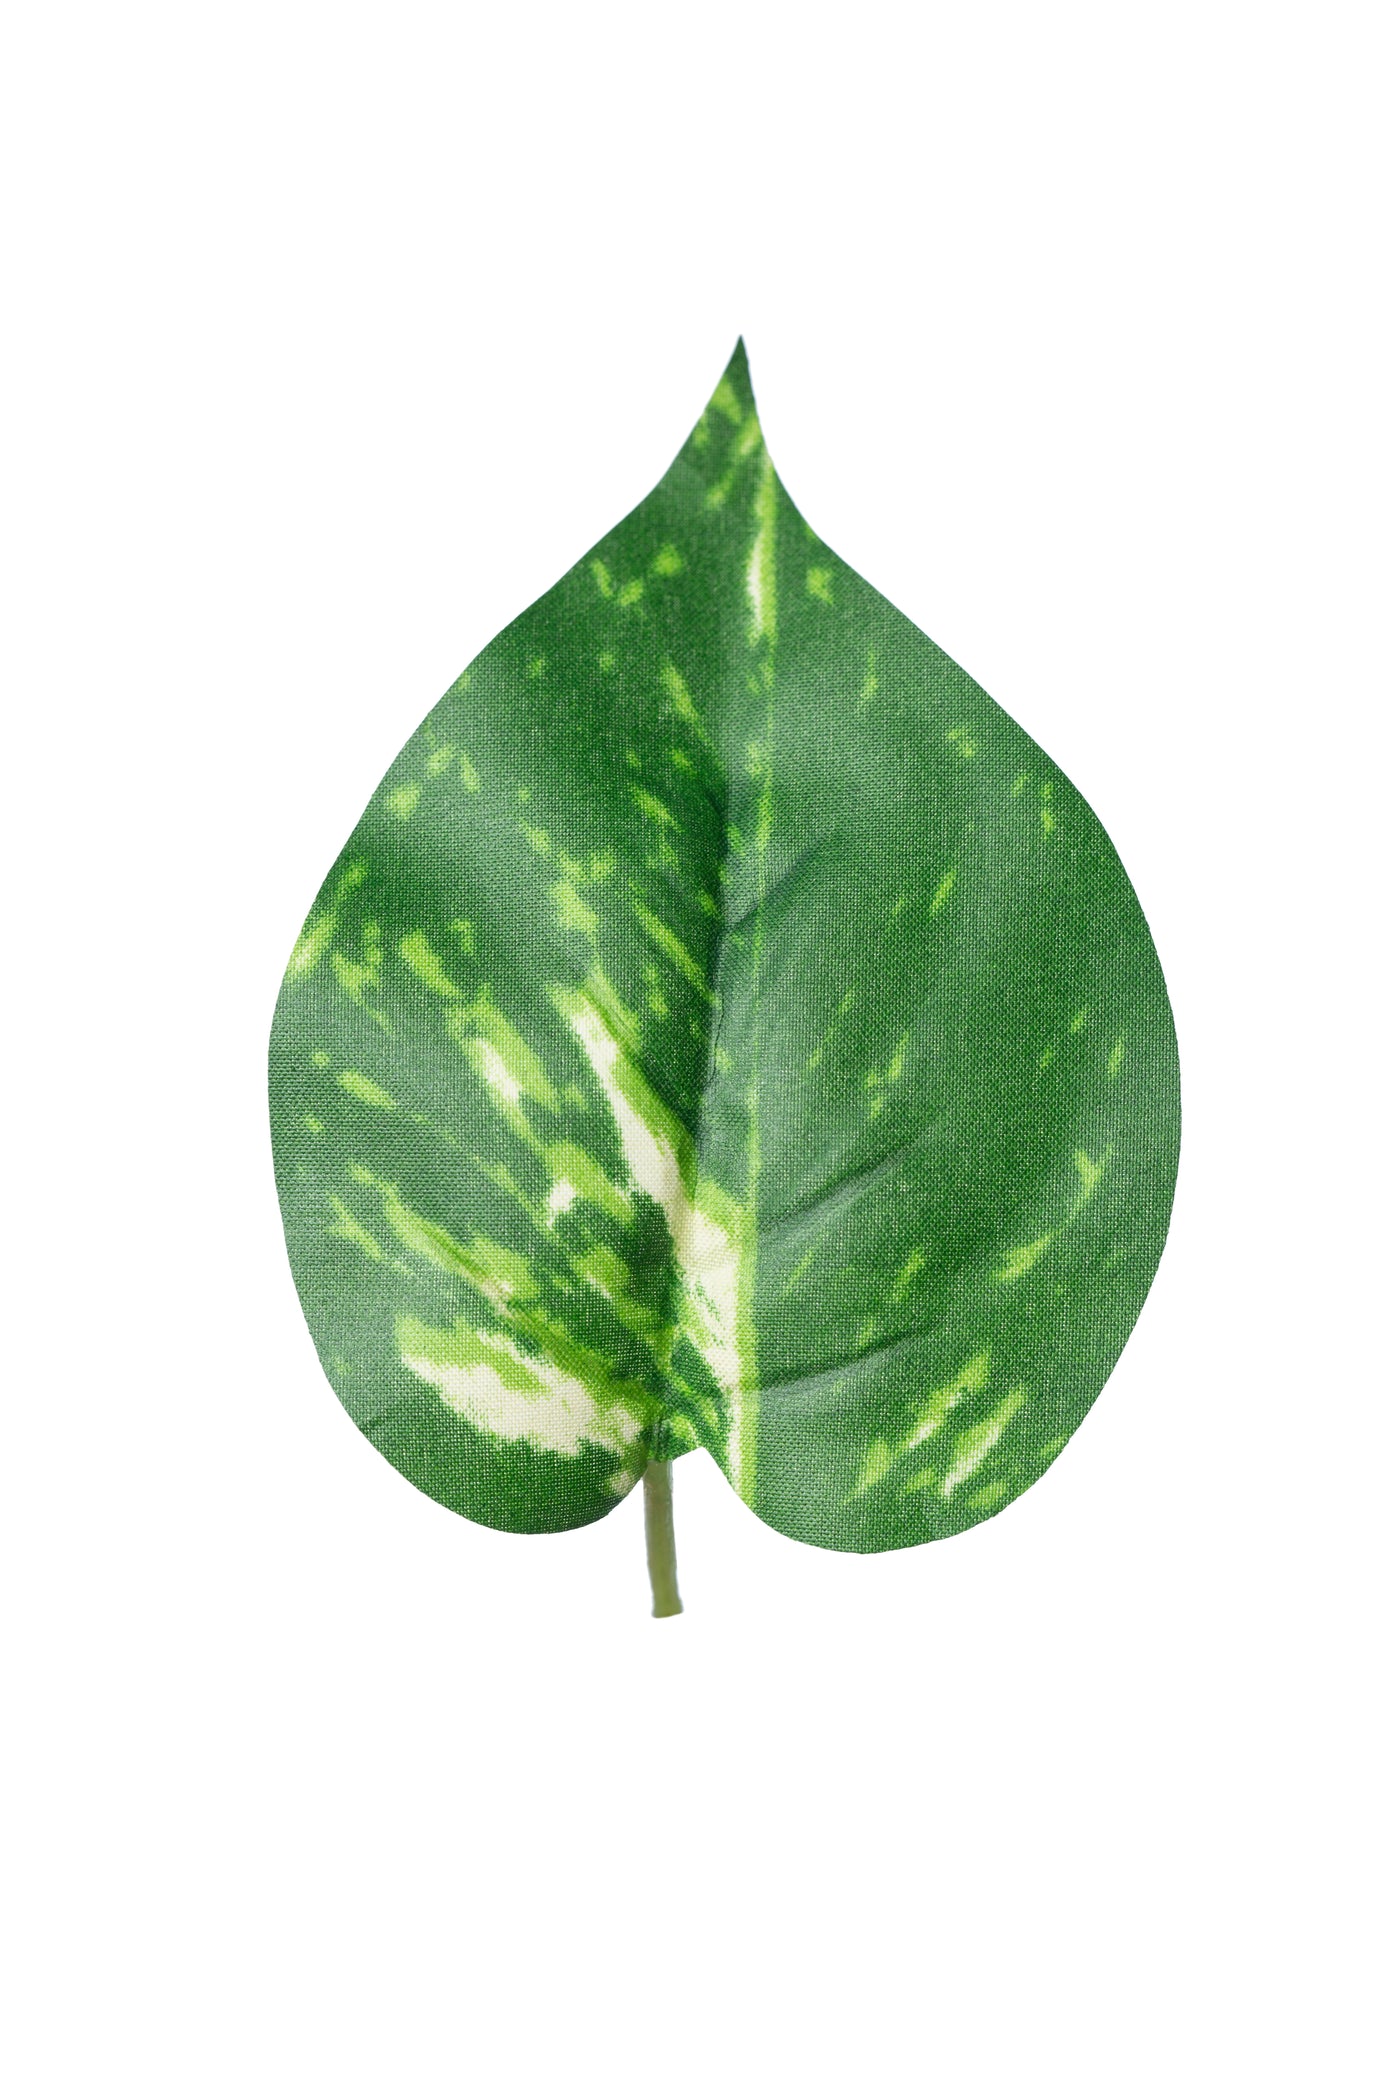 Ghirlanda artificiala scindapsus 170cm. 138 frunze. verde/alb